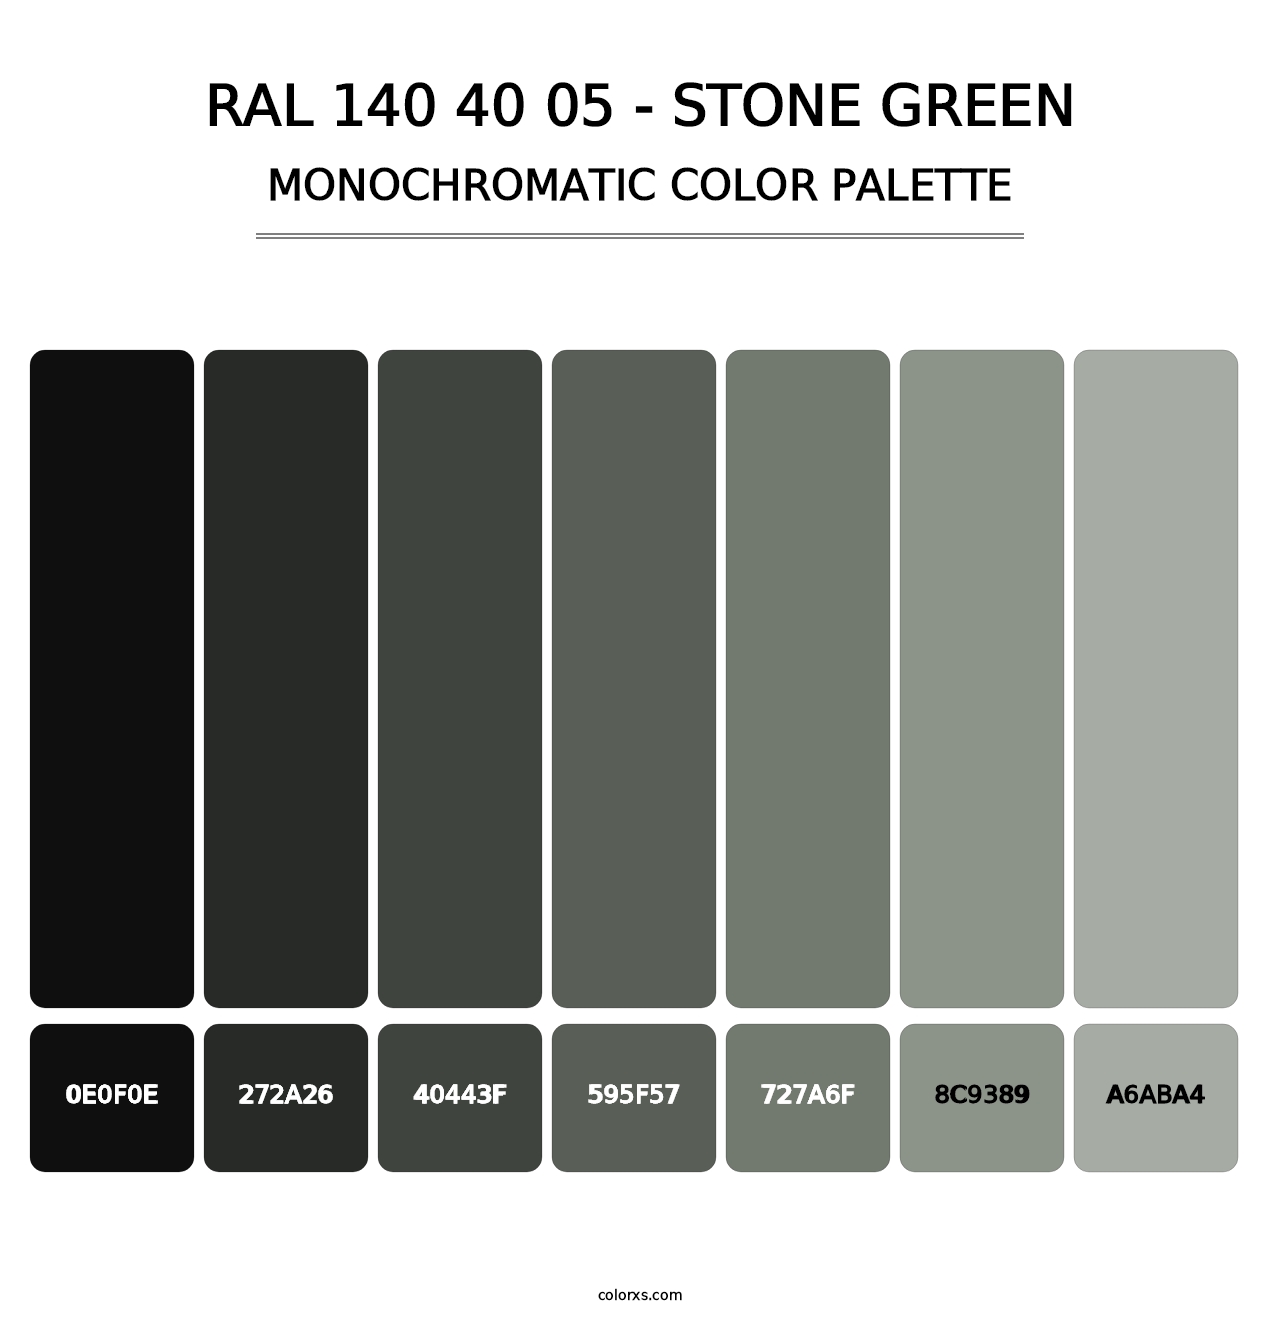 RAL 140 40 05 - Stone Green - Monochromatic Color Palette